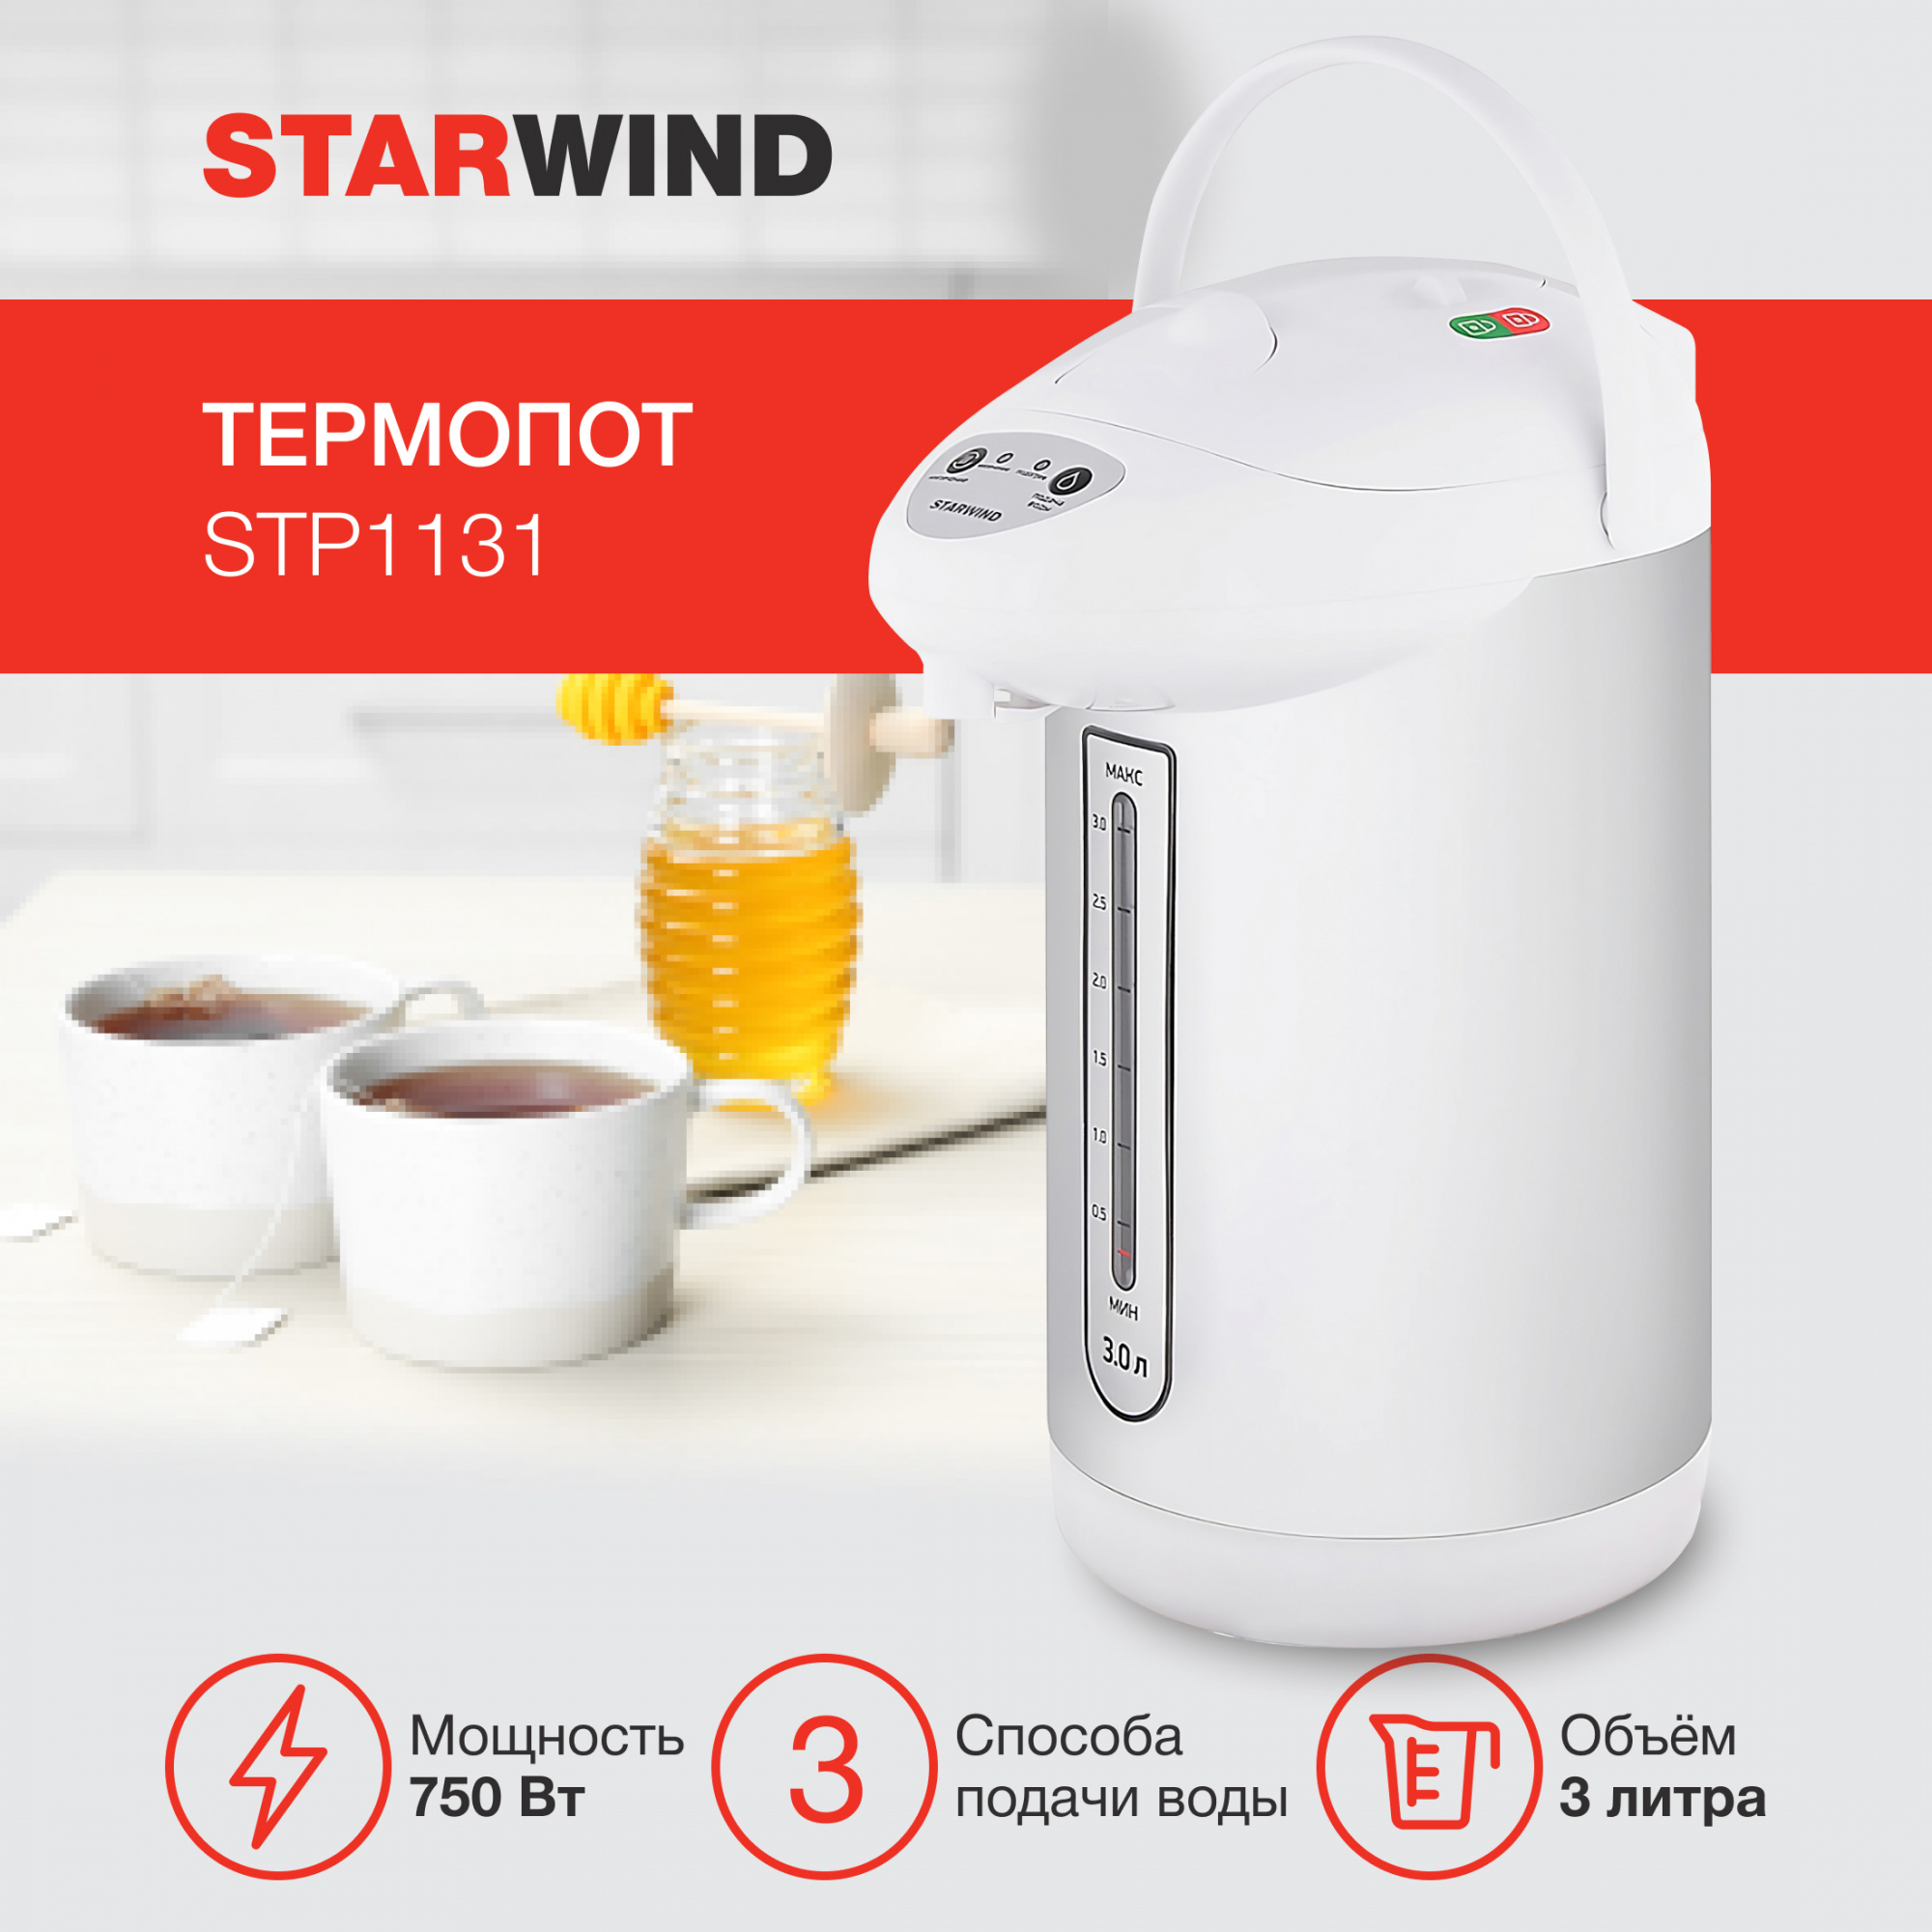 Термопот Starwind STP1131 белый от магазина Старвинд